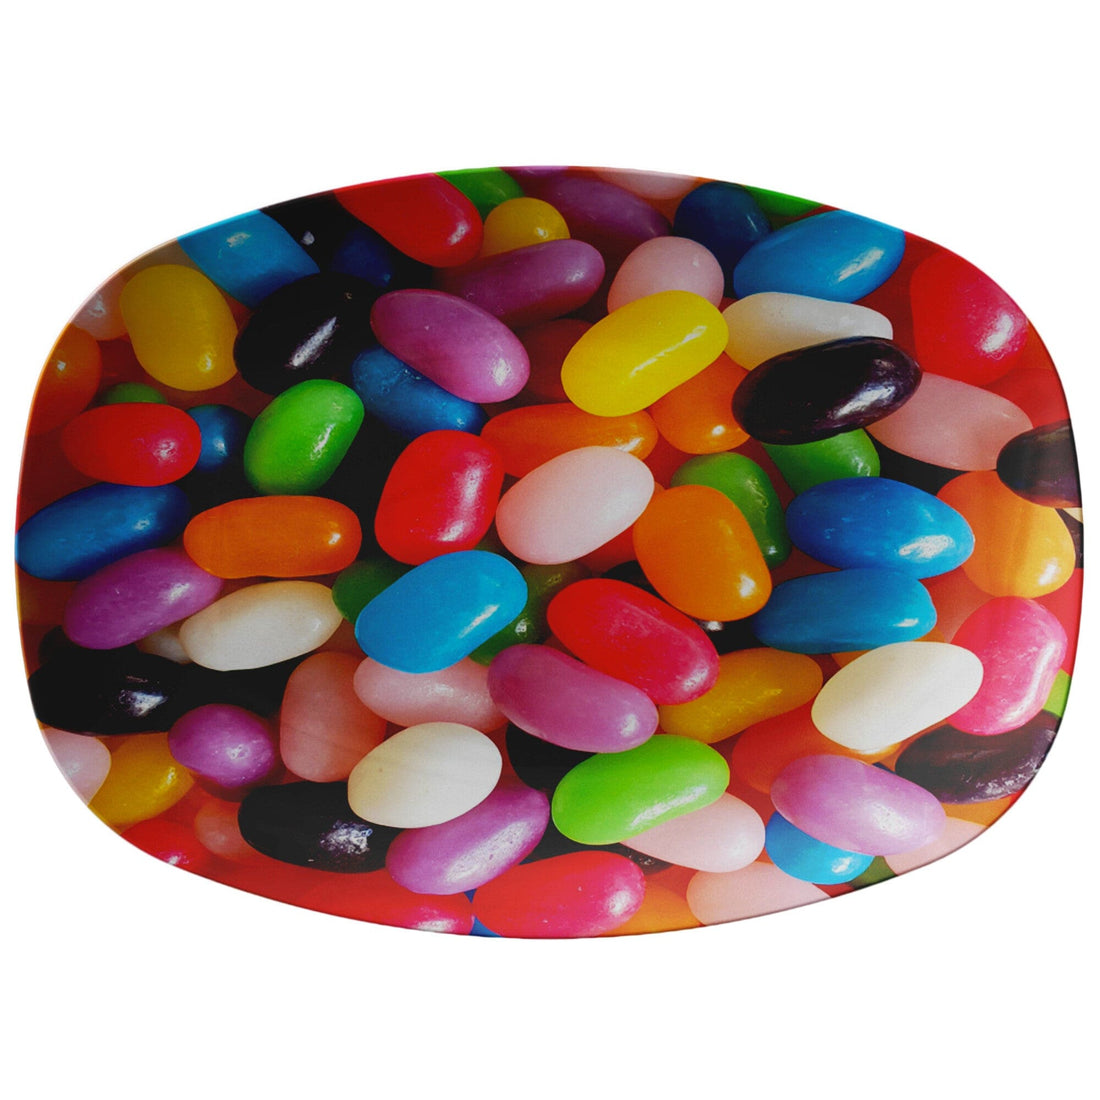 Kate McEnroe New York Jellybeans Candy Decorative Serving PlatterServing Platters9727